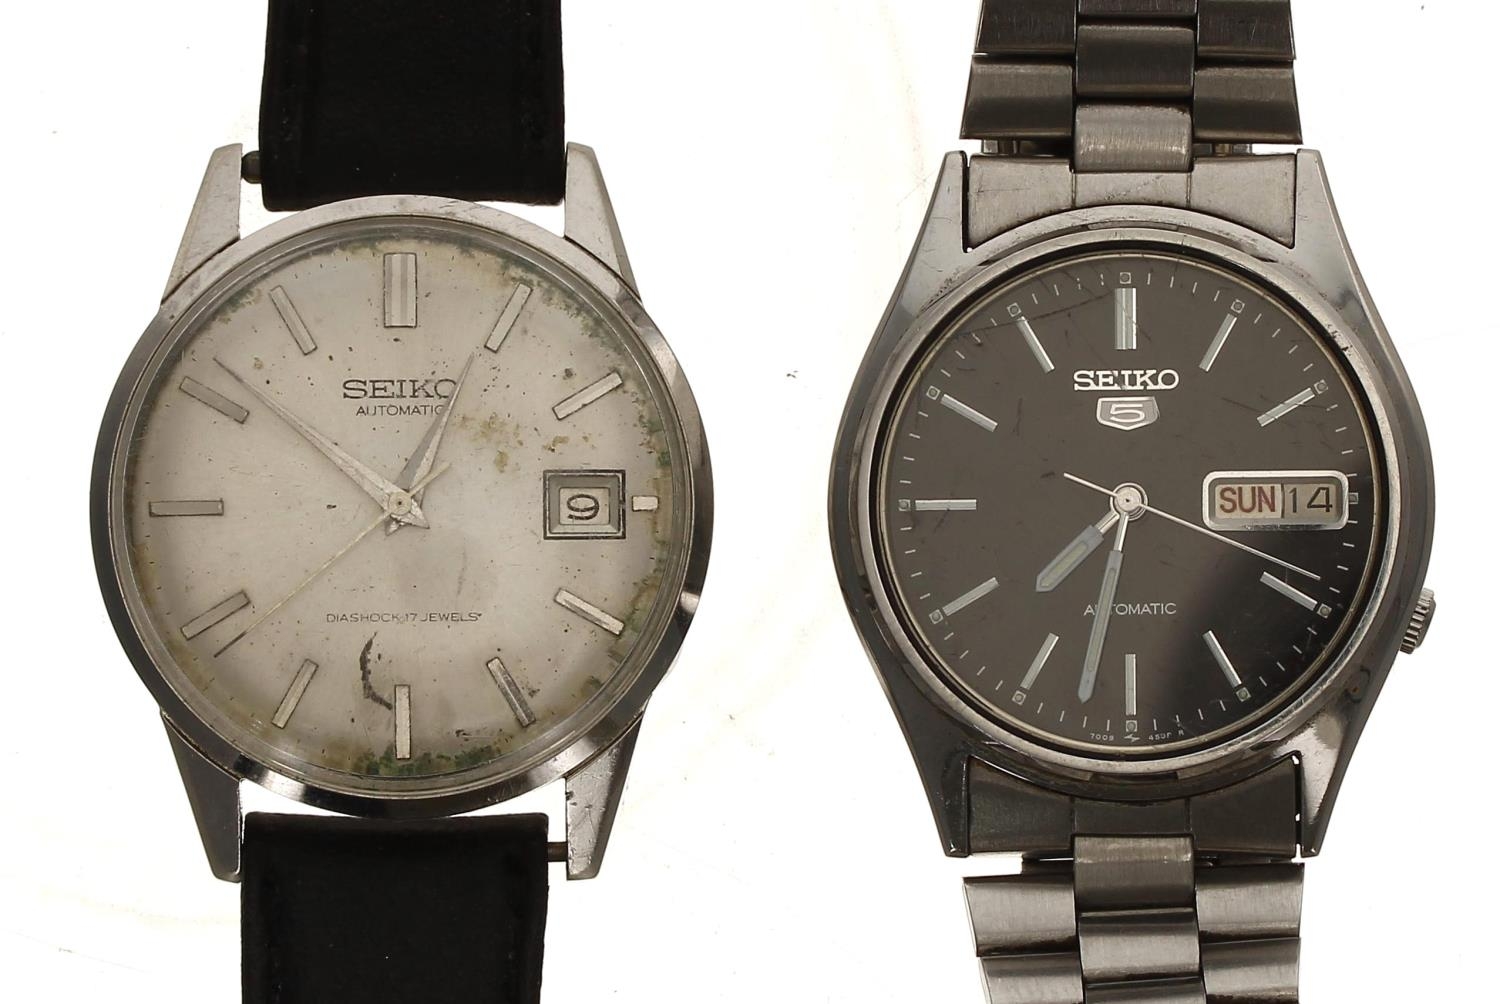 Seiko 5 automatic stainless steel gentleman's wristwatch, reference no. 7009-3100, black dial, Seiko